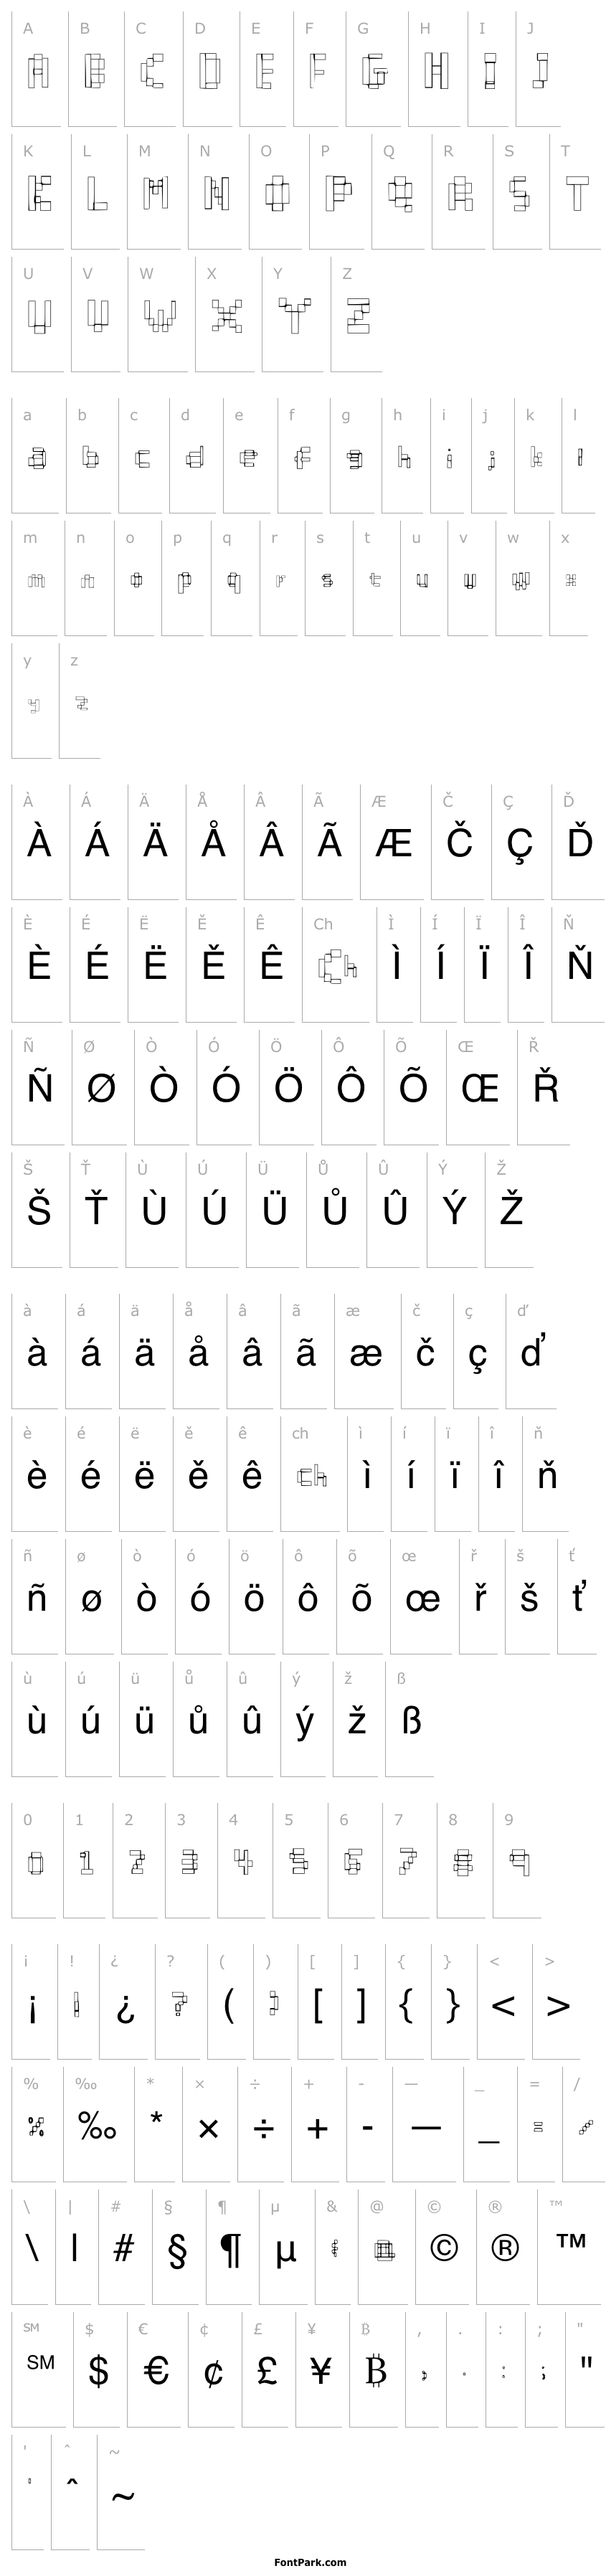 Overview Cube Font Regular